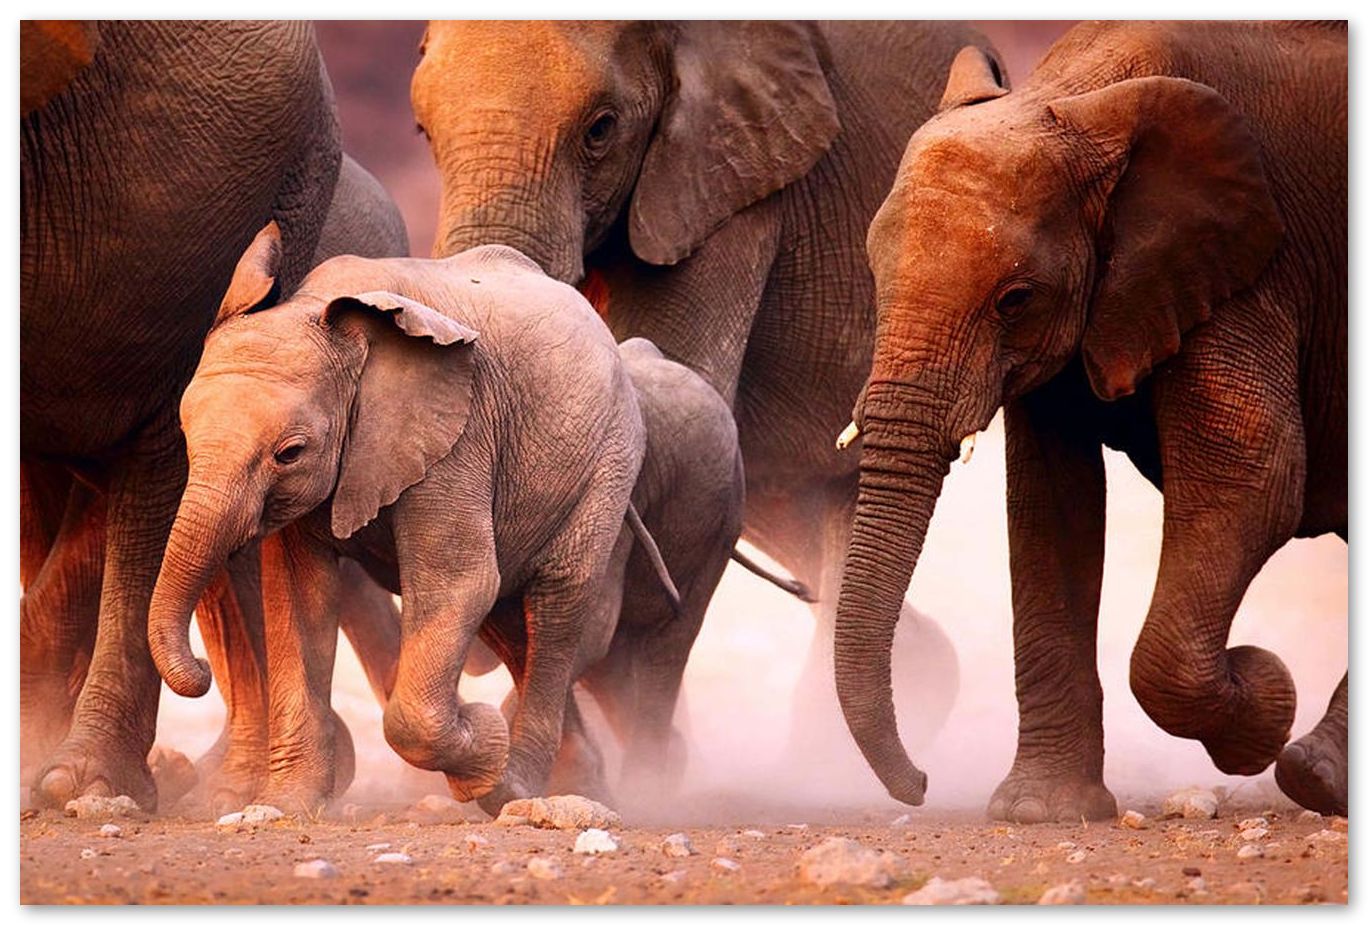 Elephants stampede - @chusna